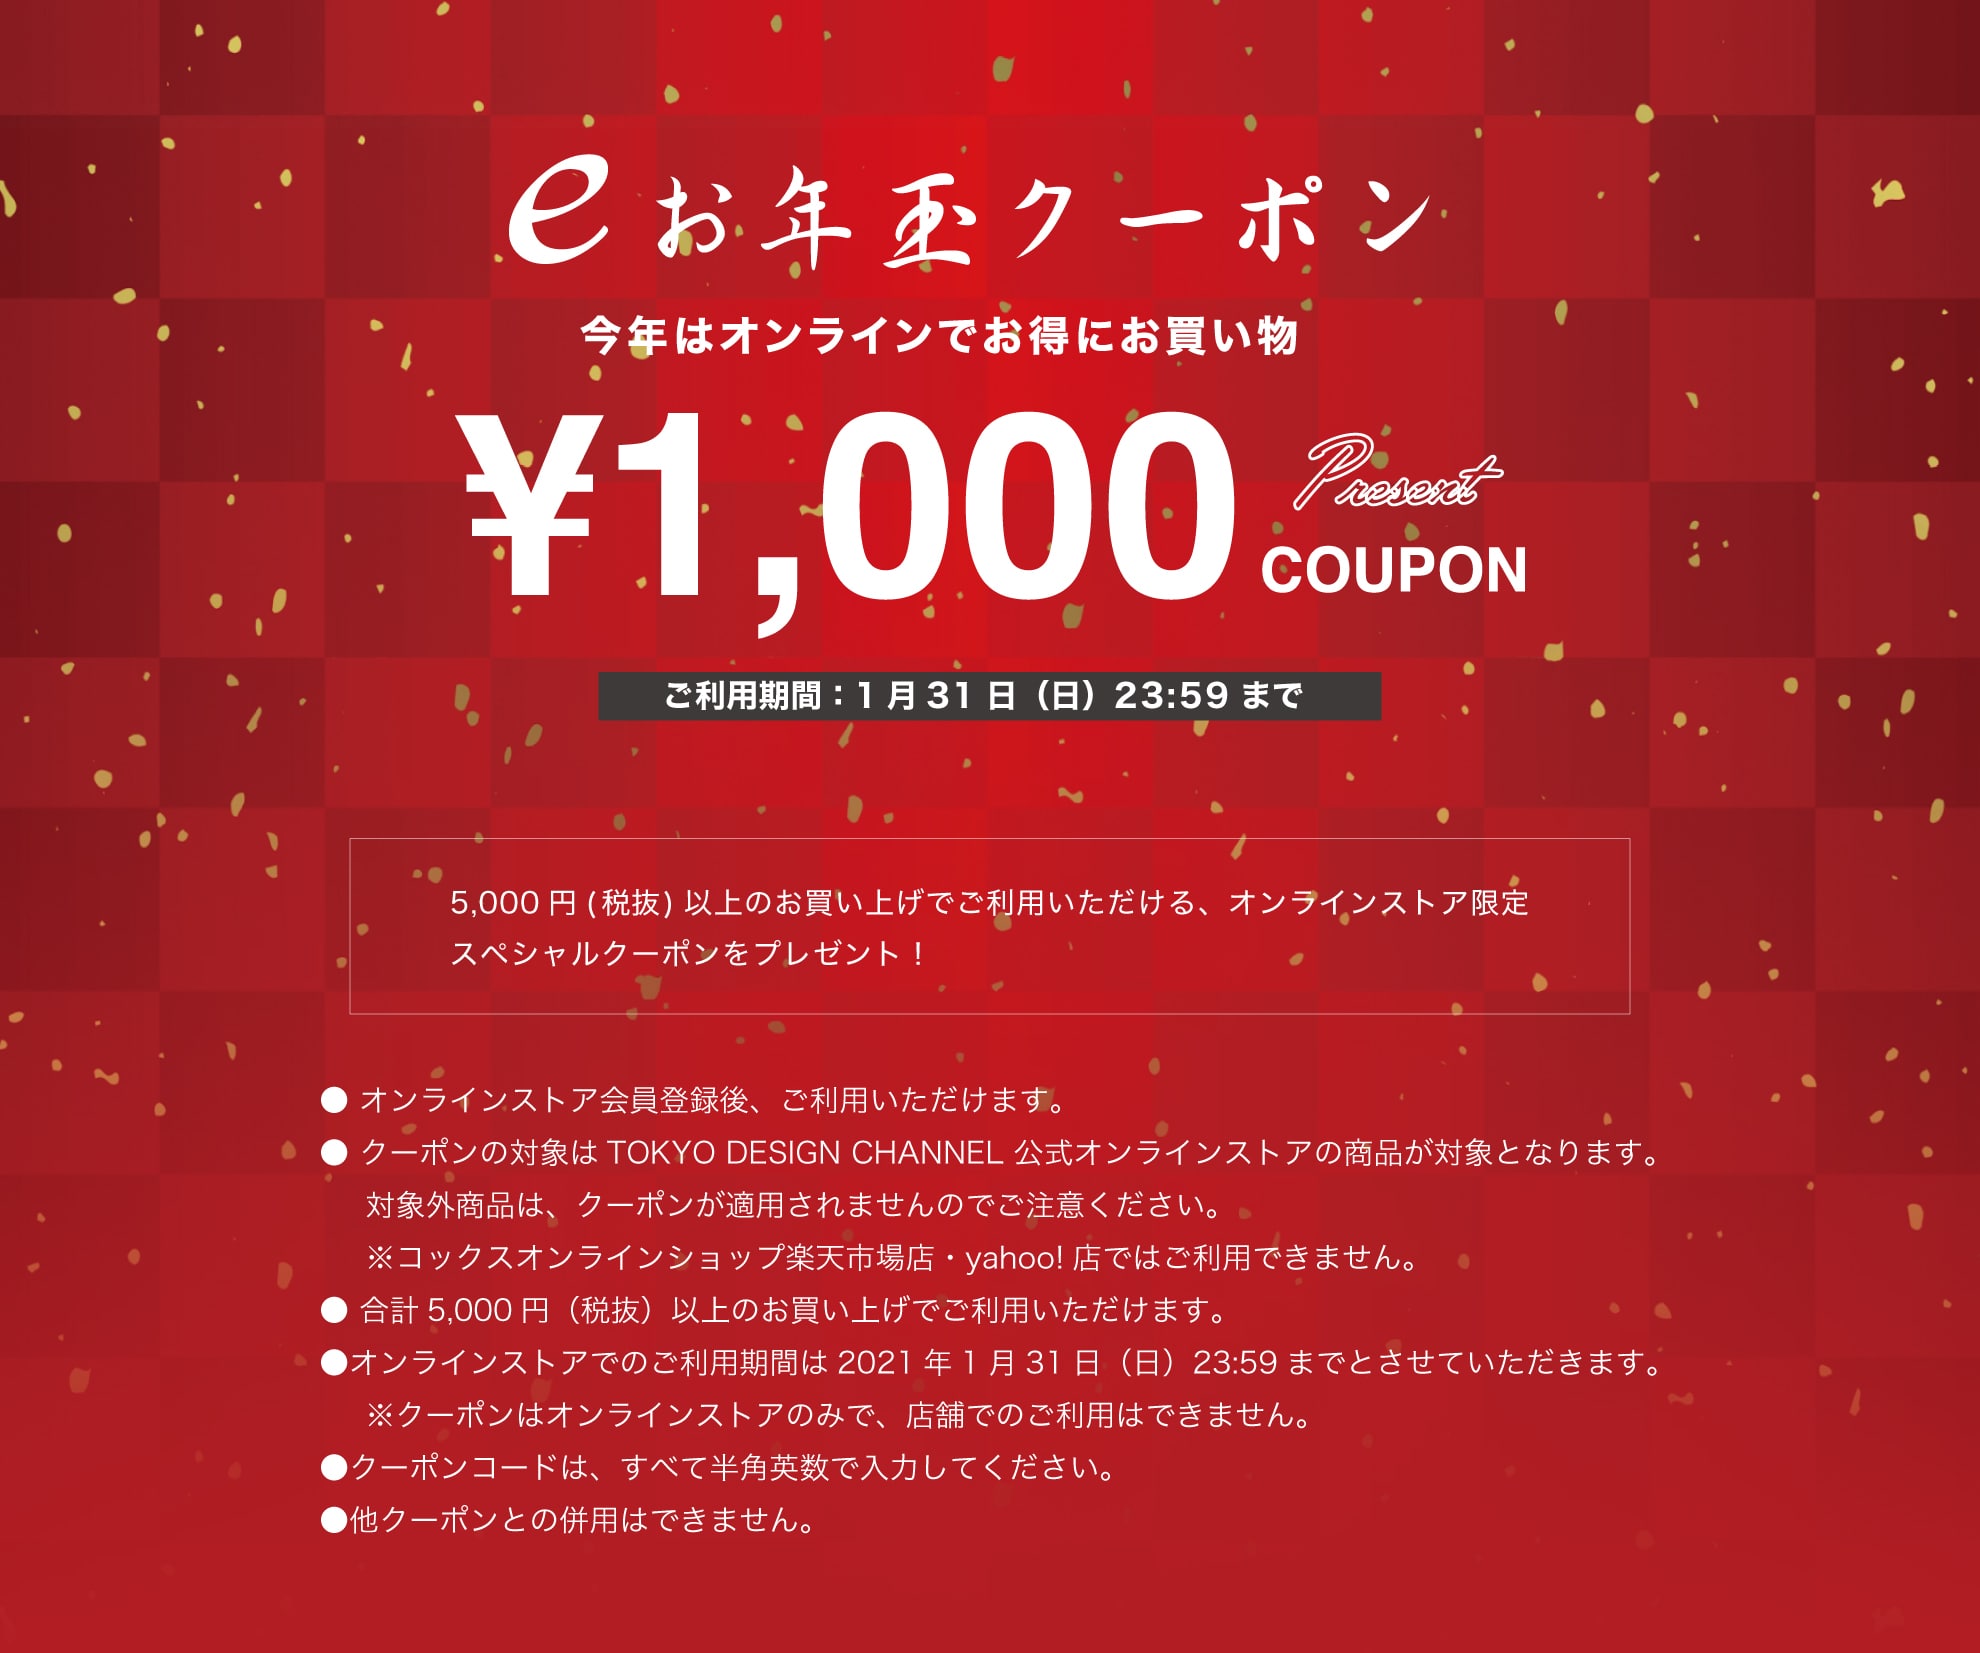 TOKYO DESIGN CHANNEL eお年玉¥1,000クーポンプレゼント